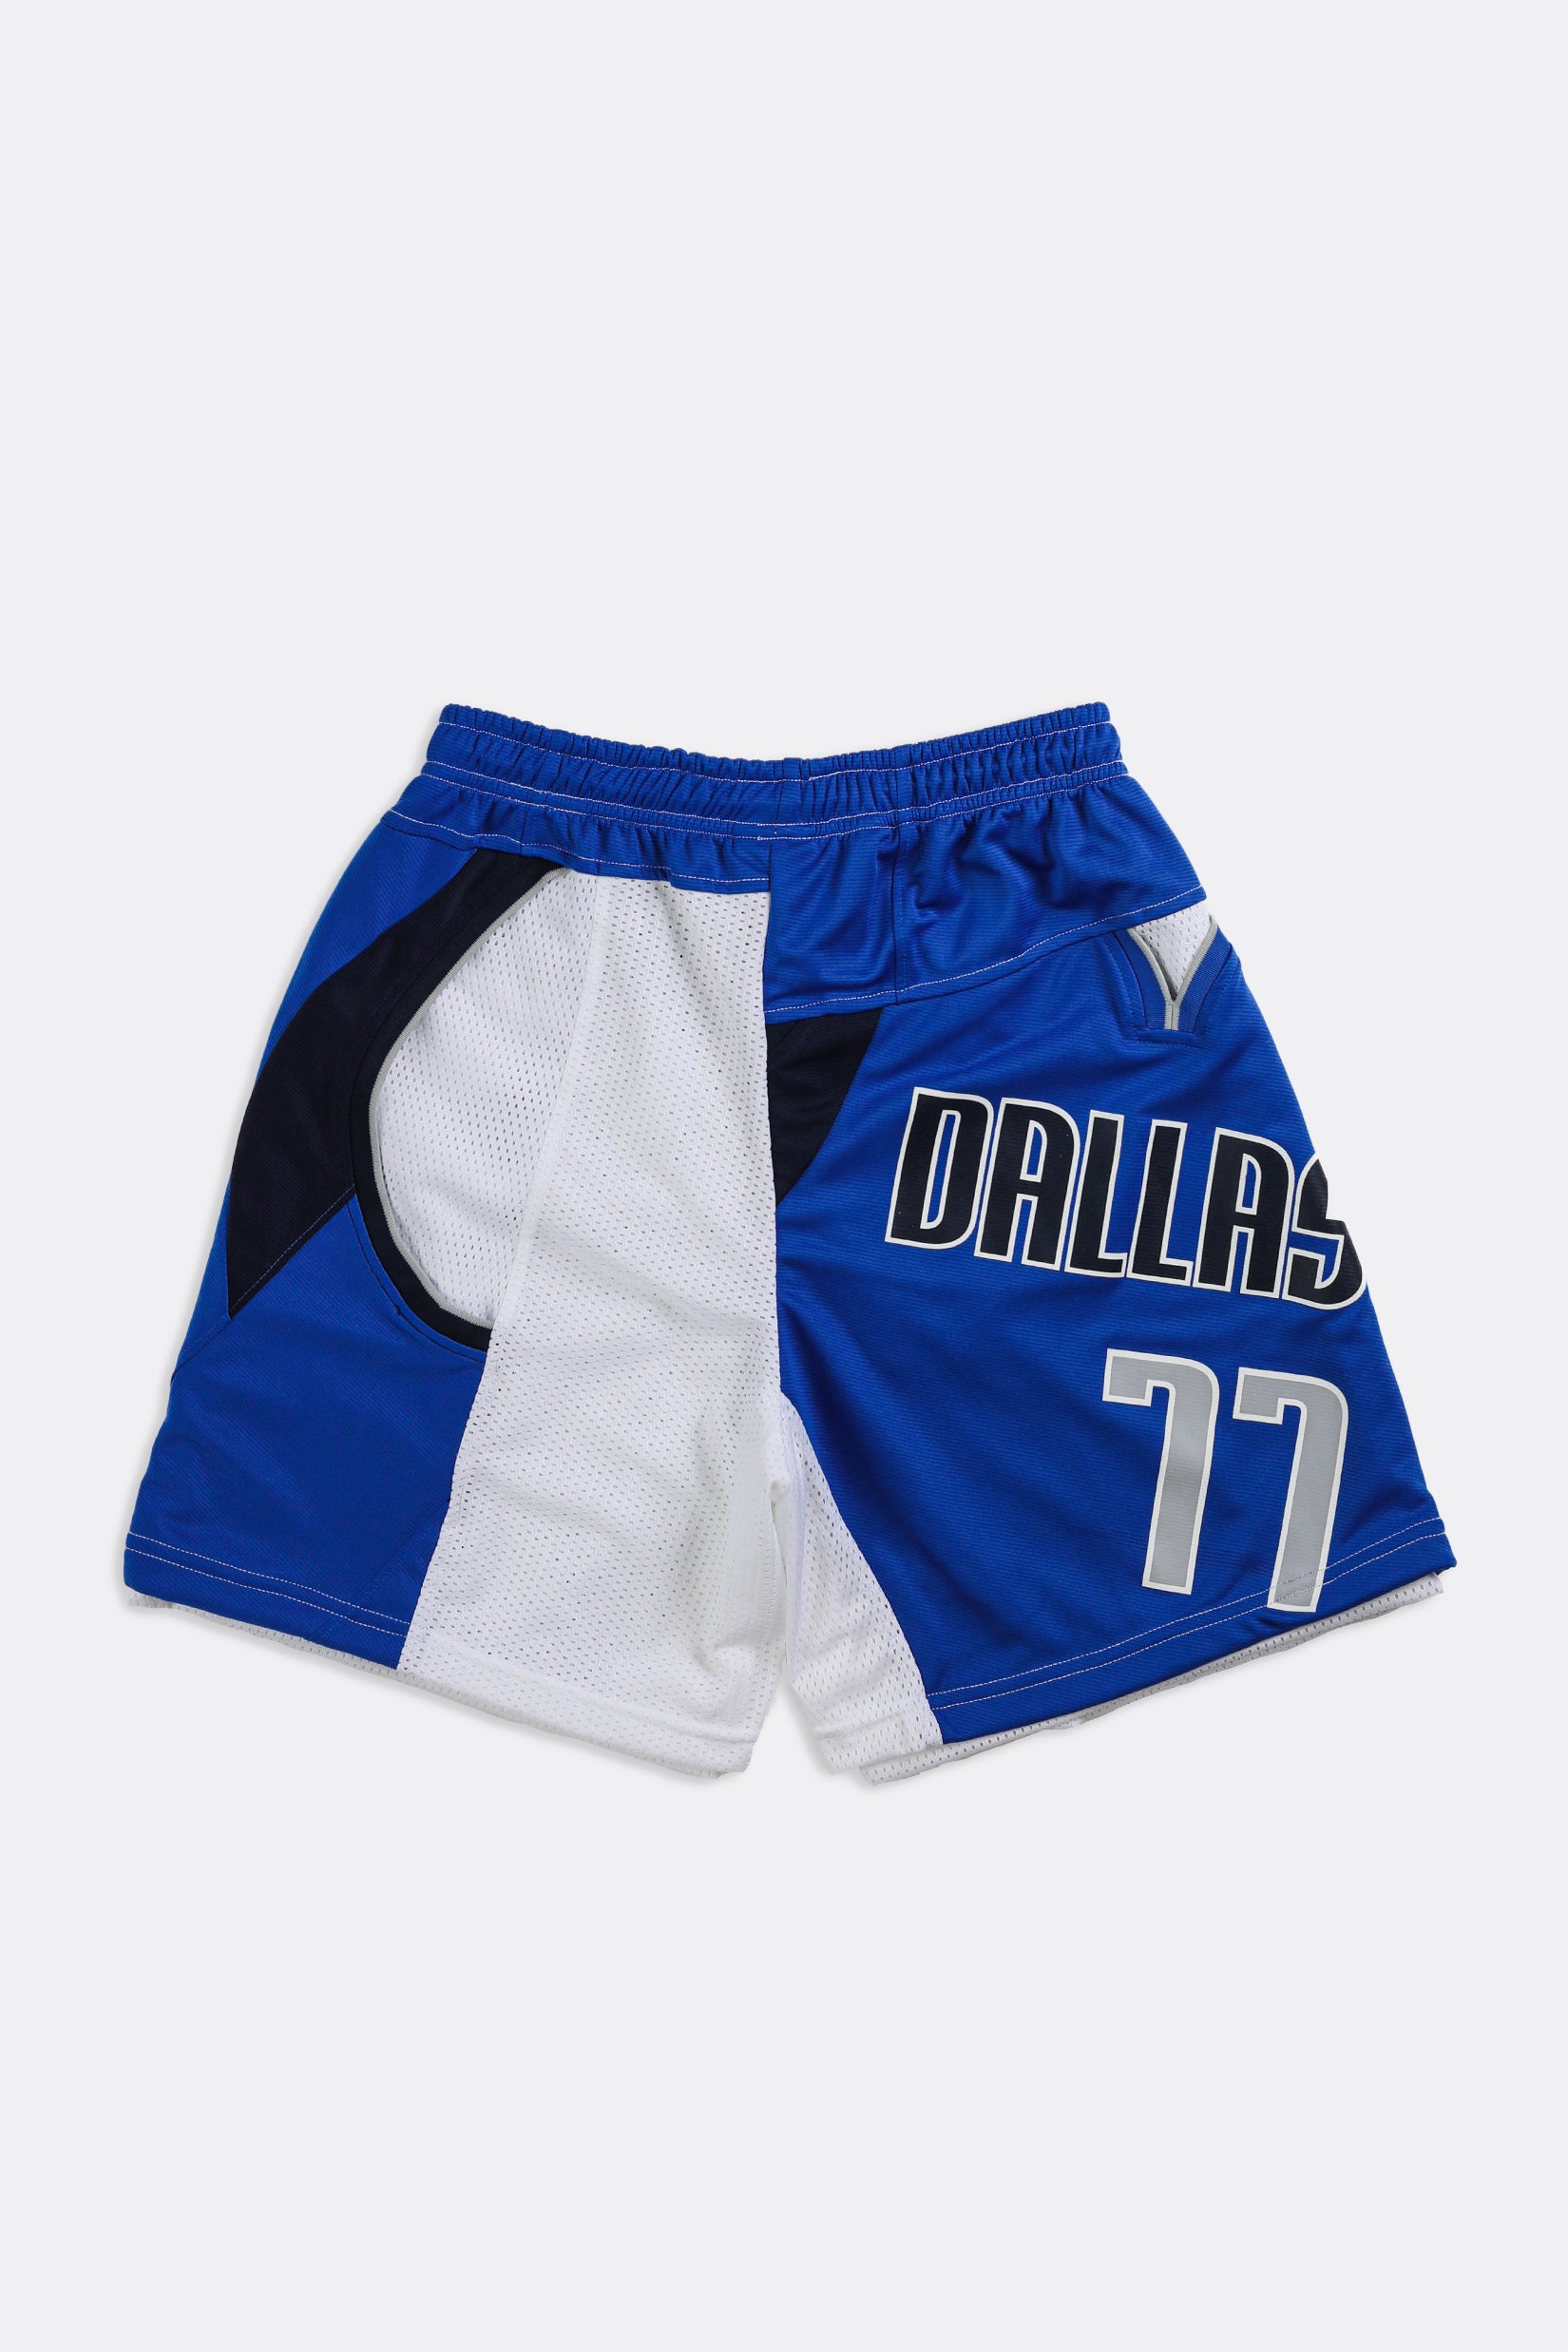 dallas mavericks basketball shorts